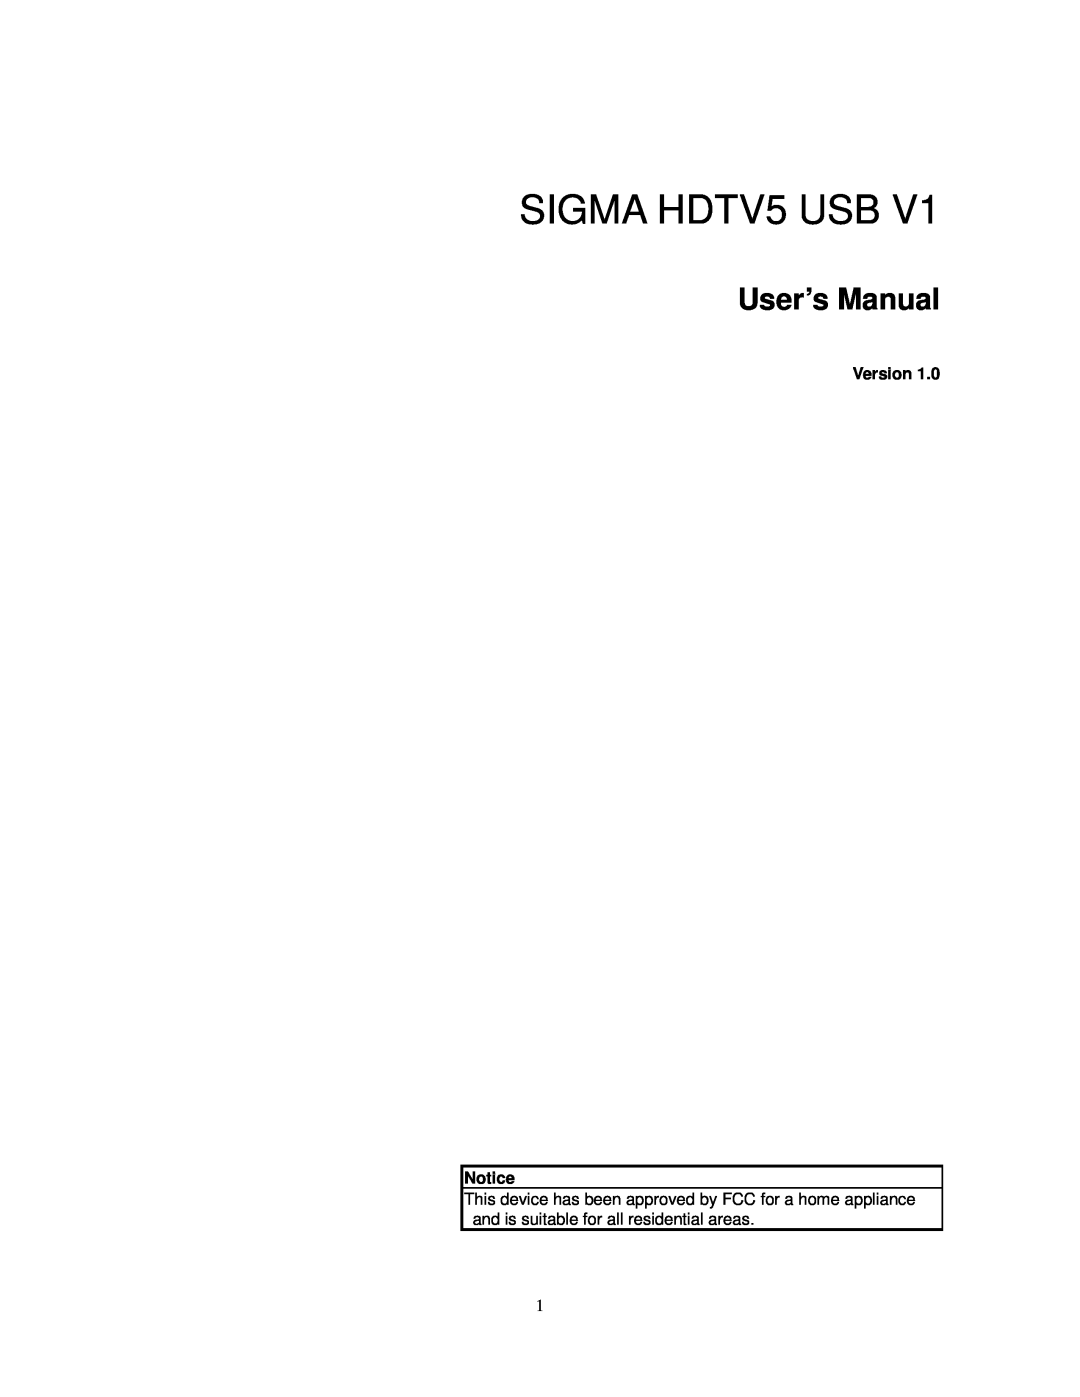 Sigma user manual SIGMA HDTV5 USB, User’s Manual 